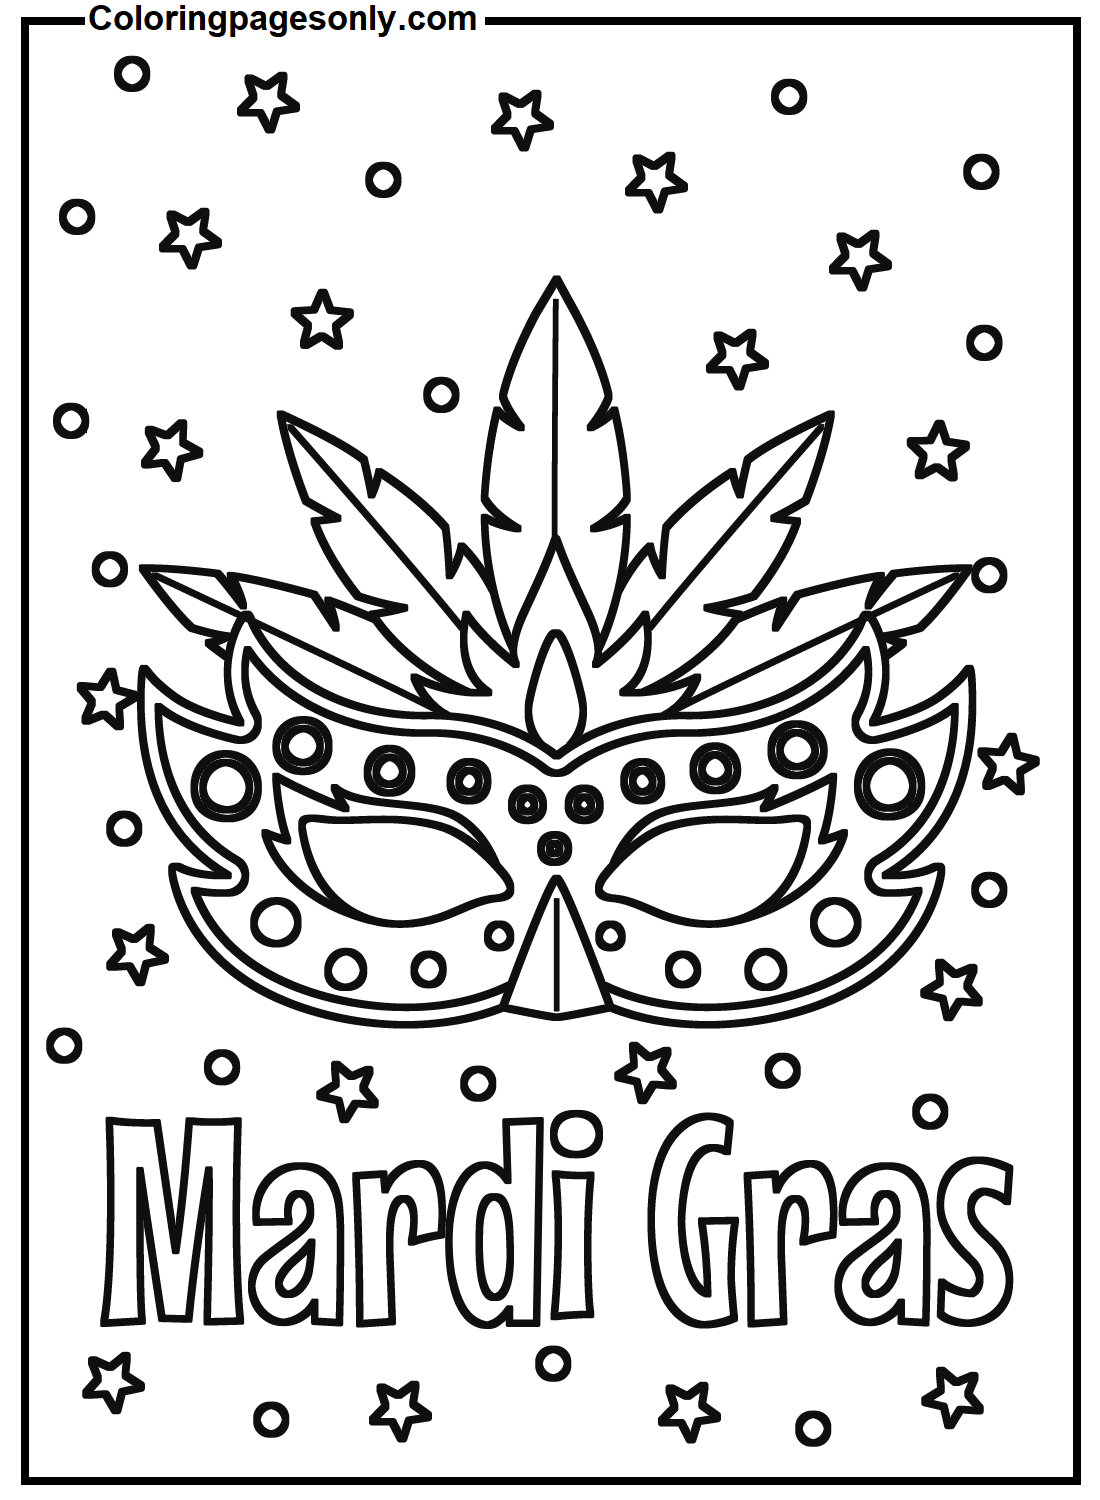 Free Mardi Gras Coloring Page